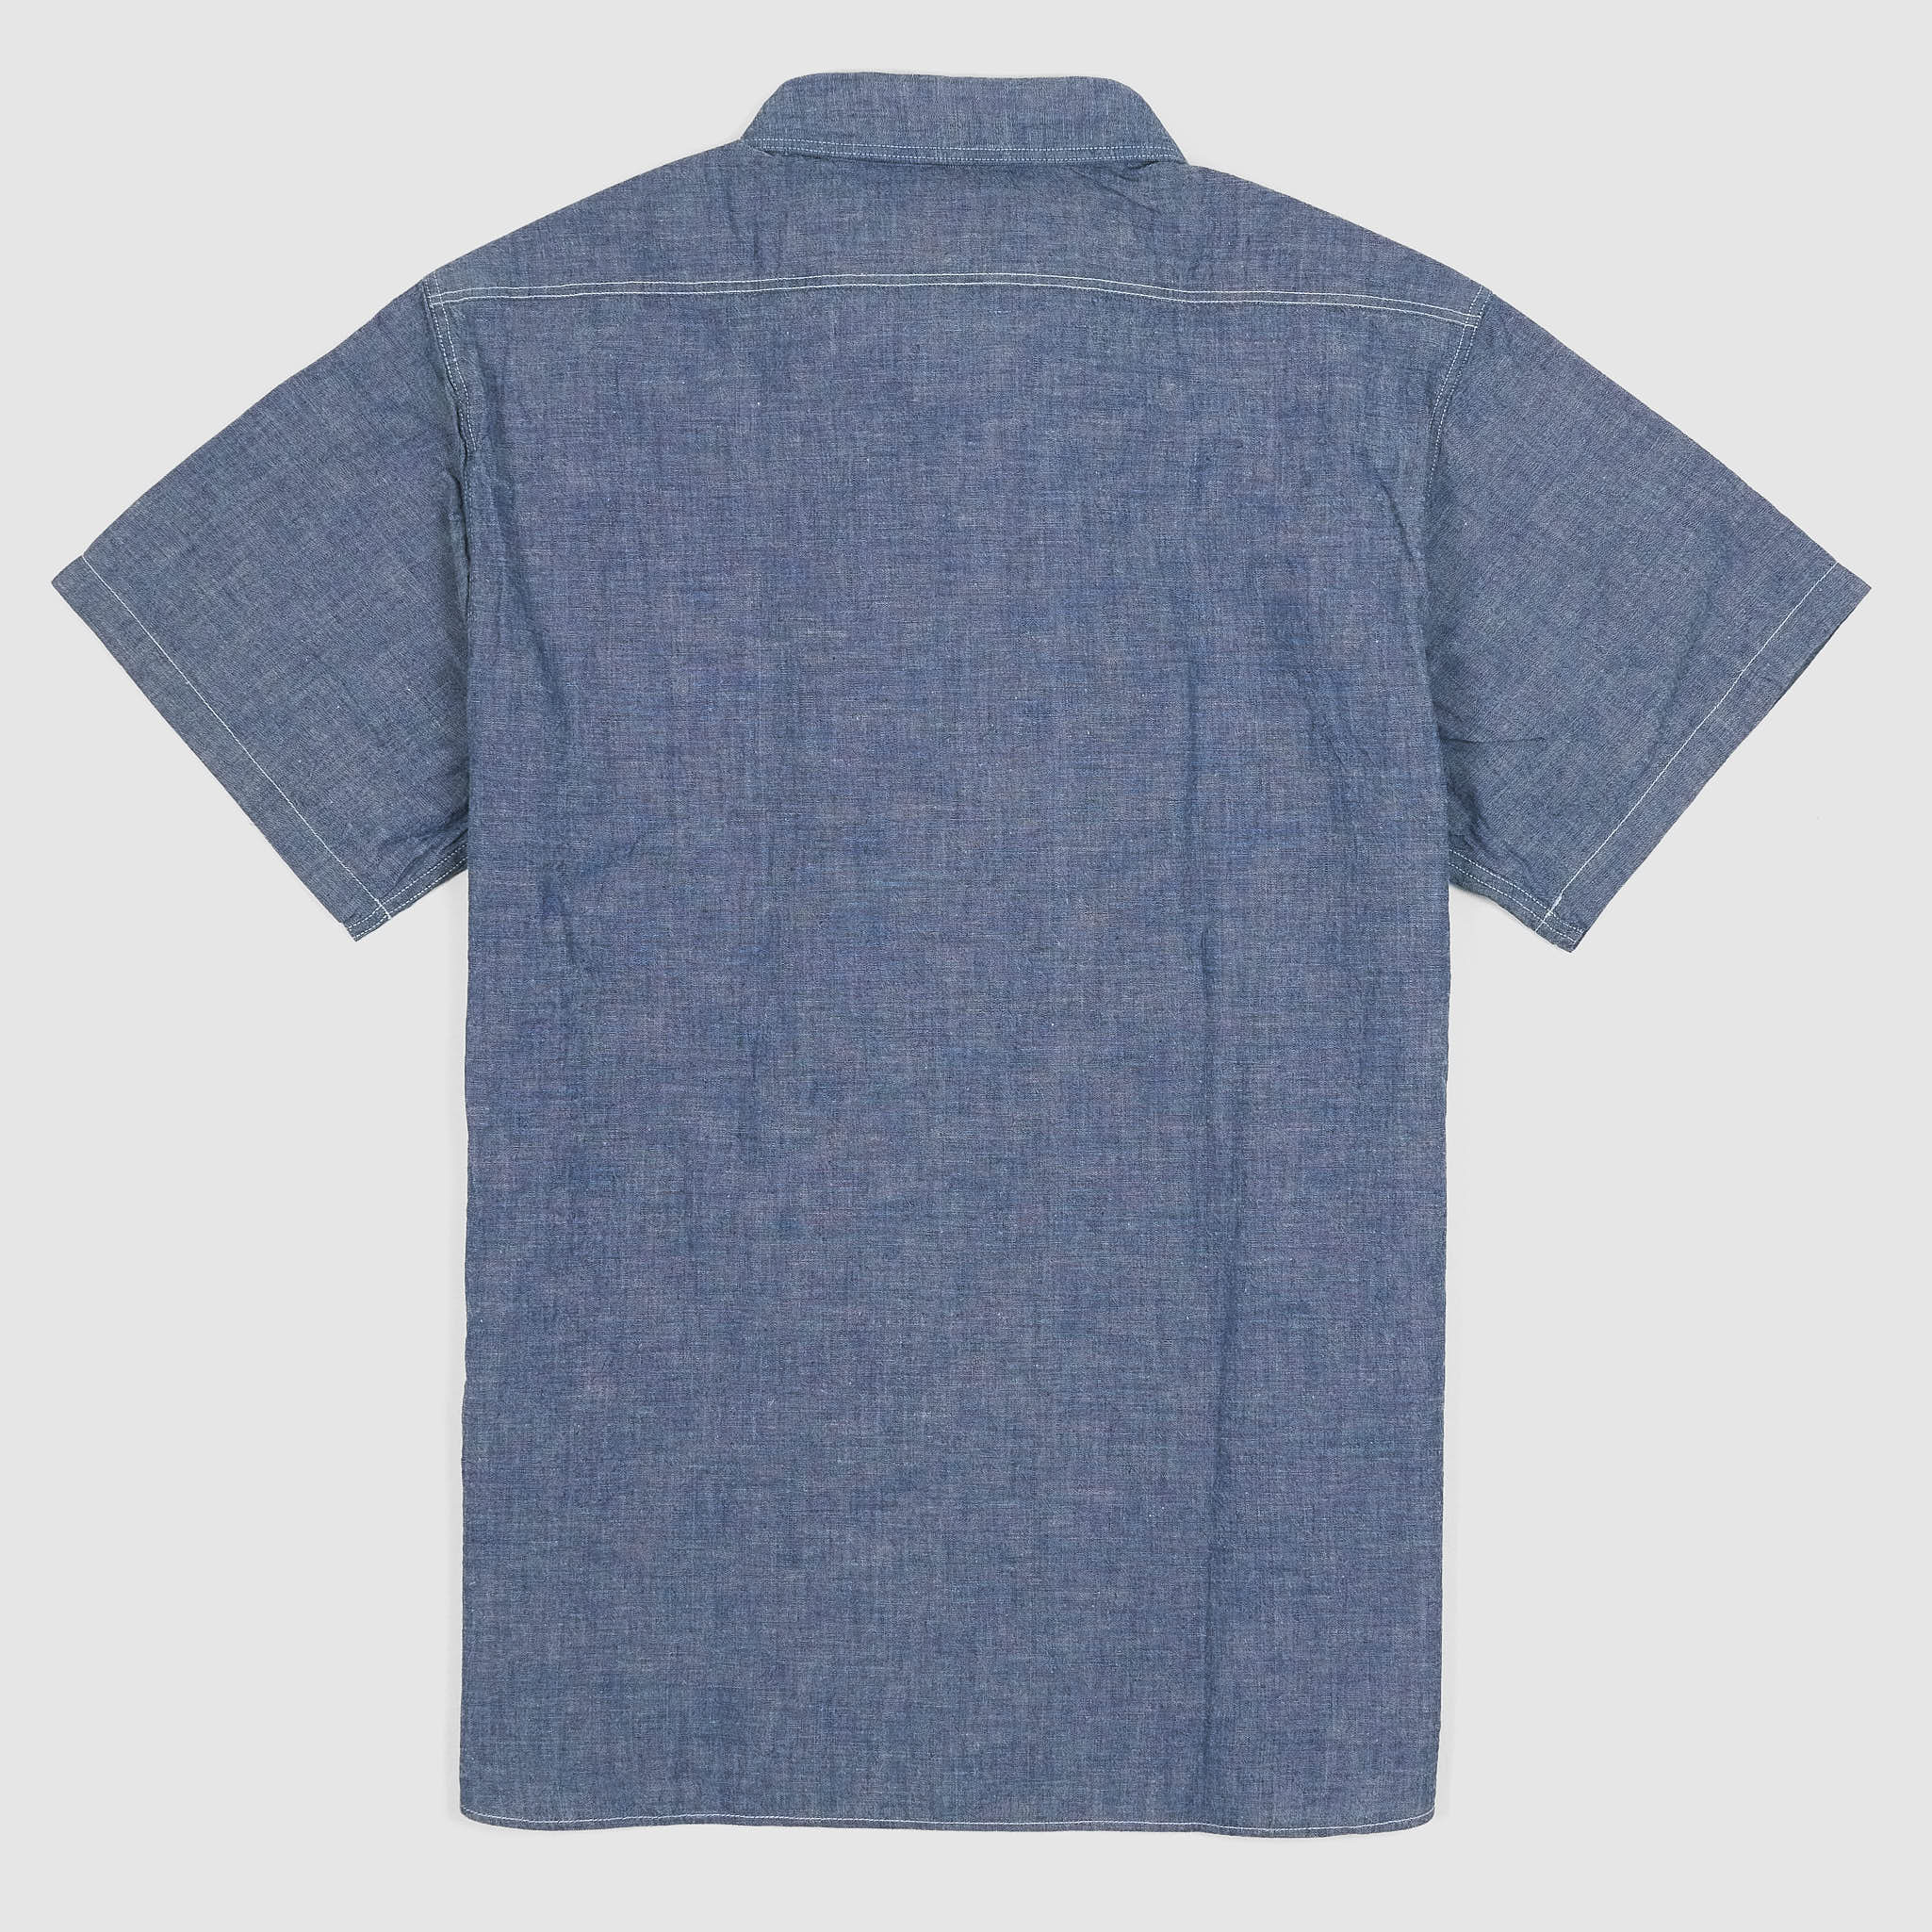 Buzz Rickson's US Navy Chambray Shirt Blue – Second Sunrise